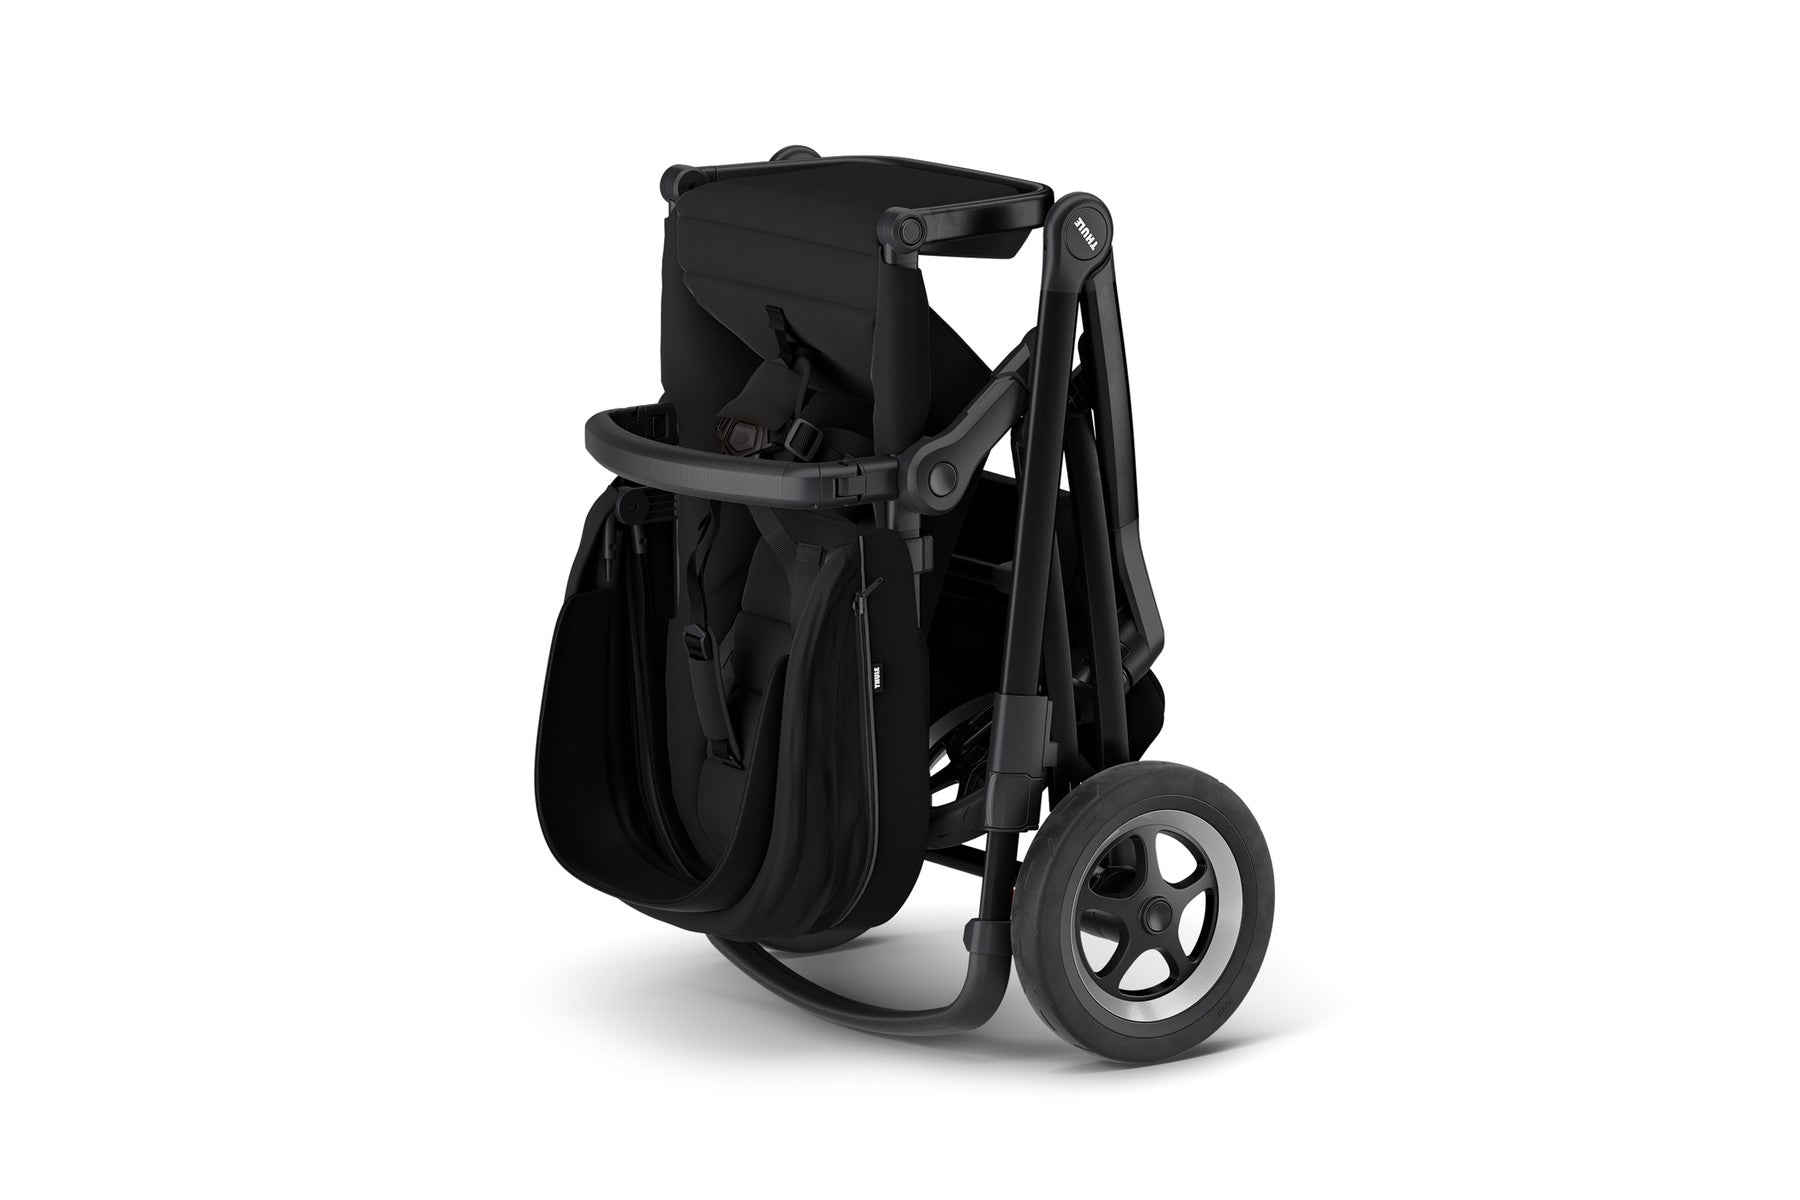 THULE Sleek City Stroller - ANB Baby -$500 - $1000